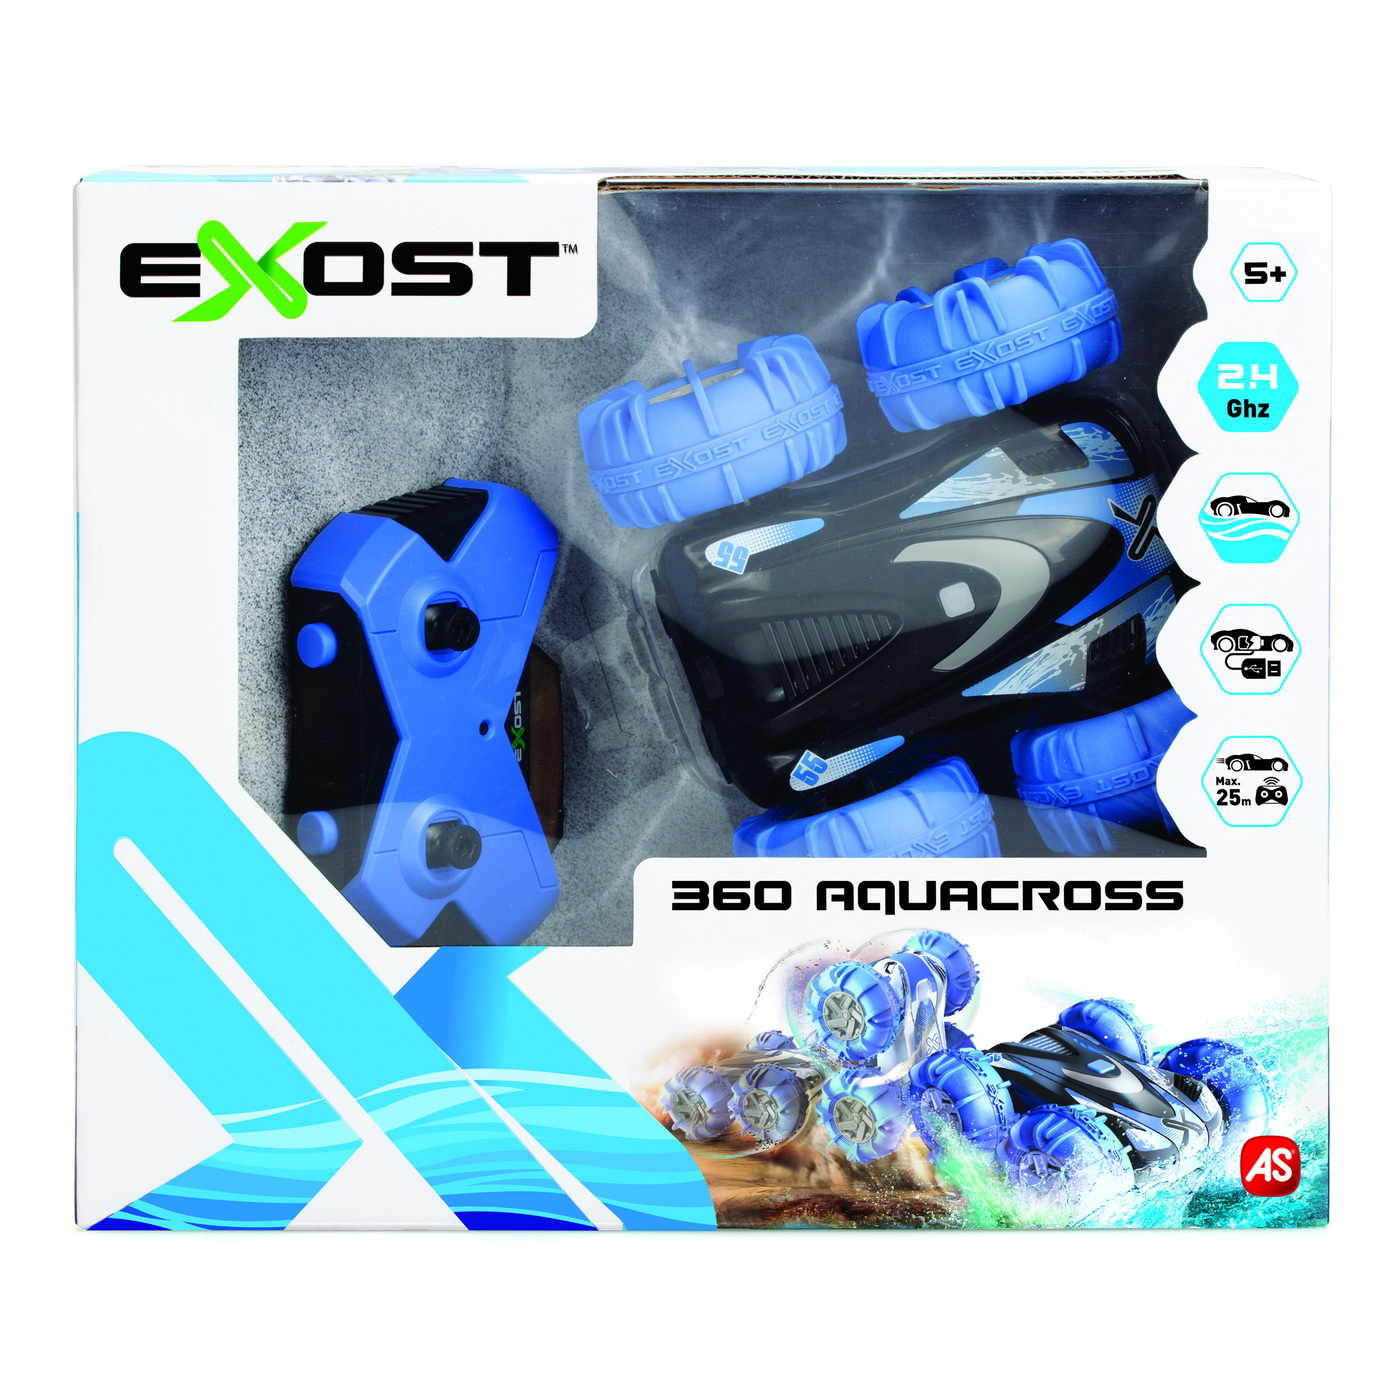 Masina cu radiocomanda - Exost - 360 Aquacross | Silverlit